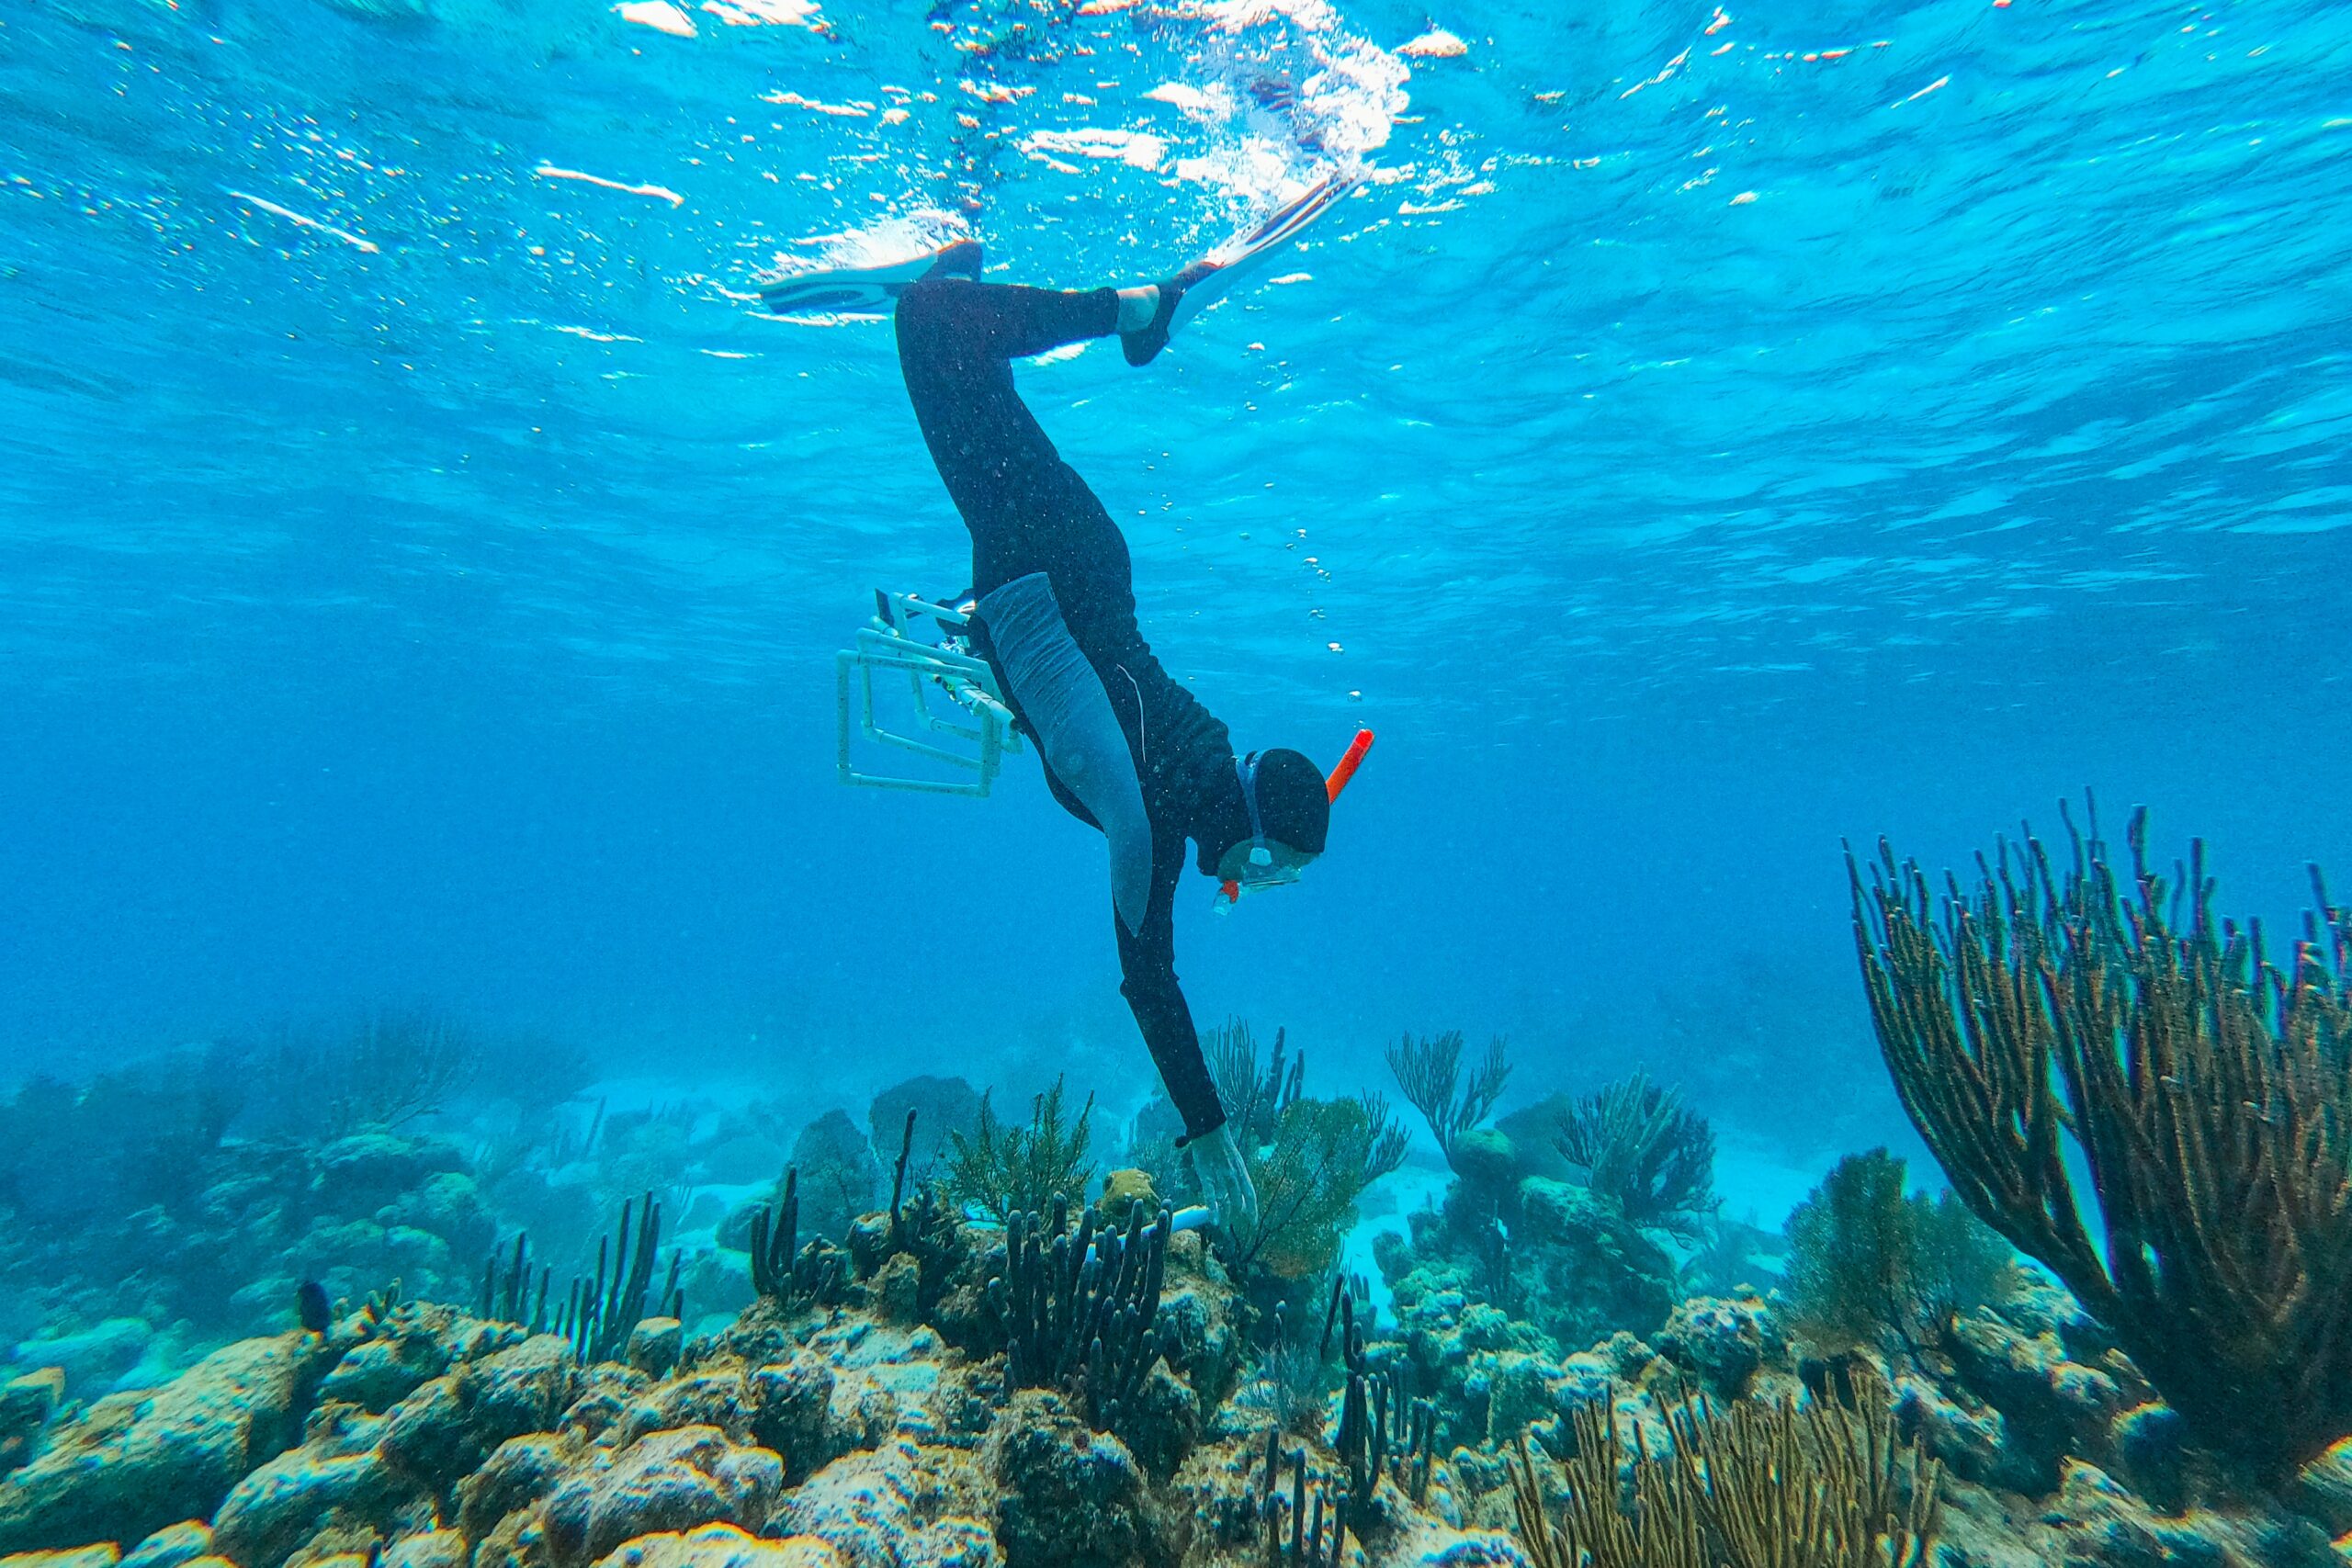 Belize Barrier Reef